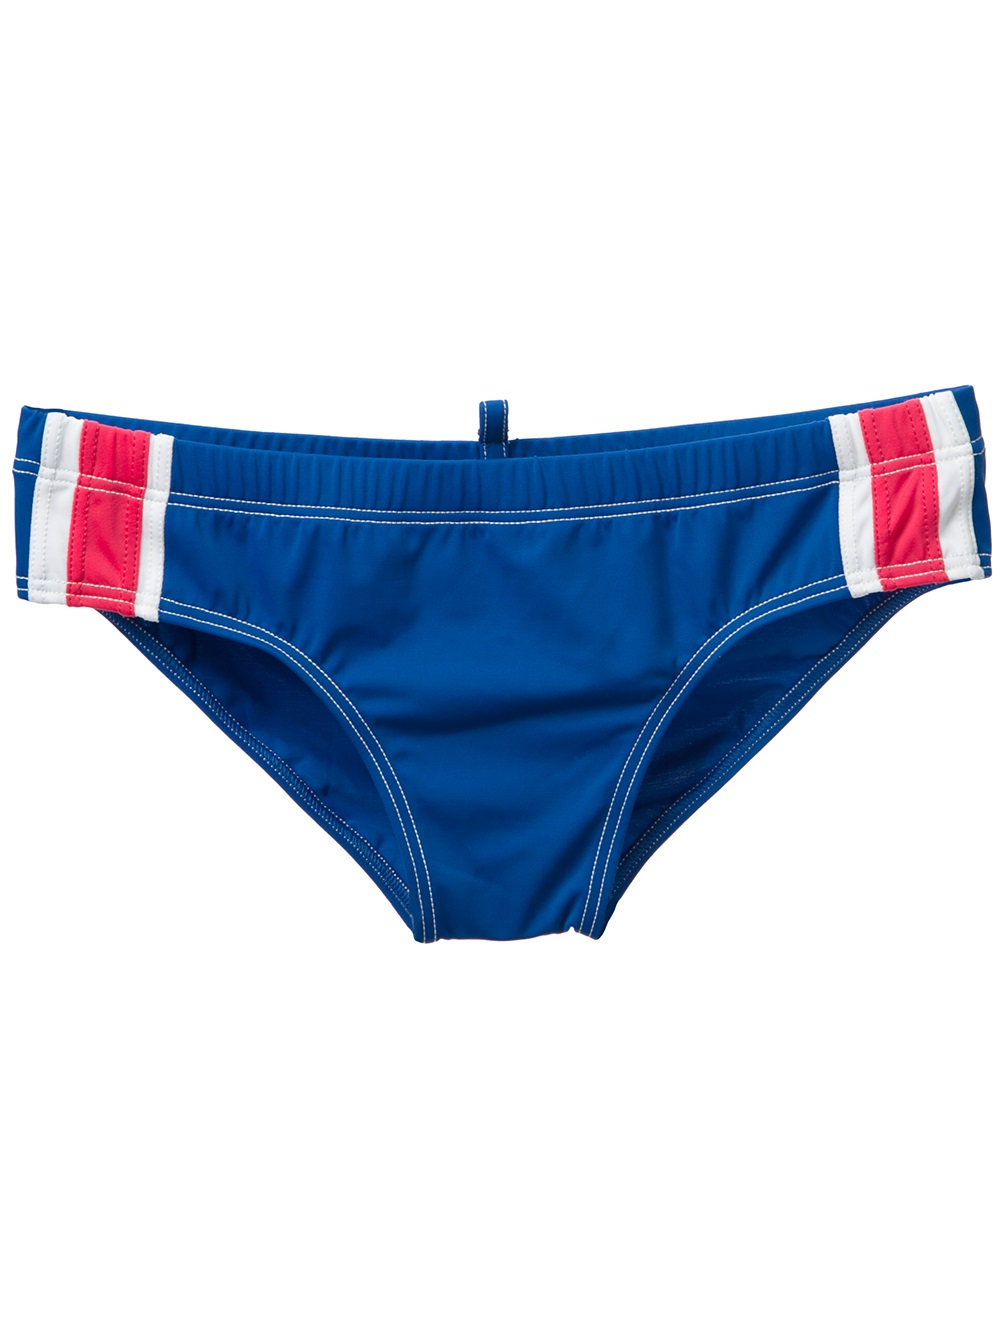 Lyst - Dsquared² Striped Swim Briefs in Blue for Men